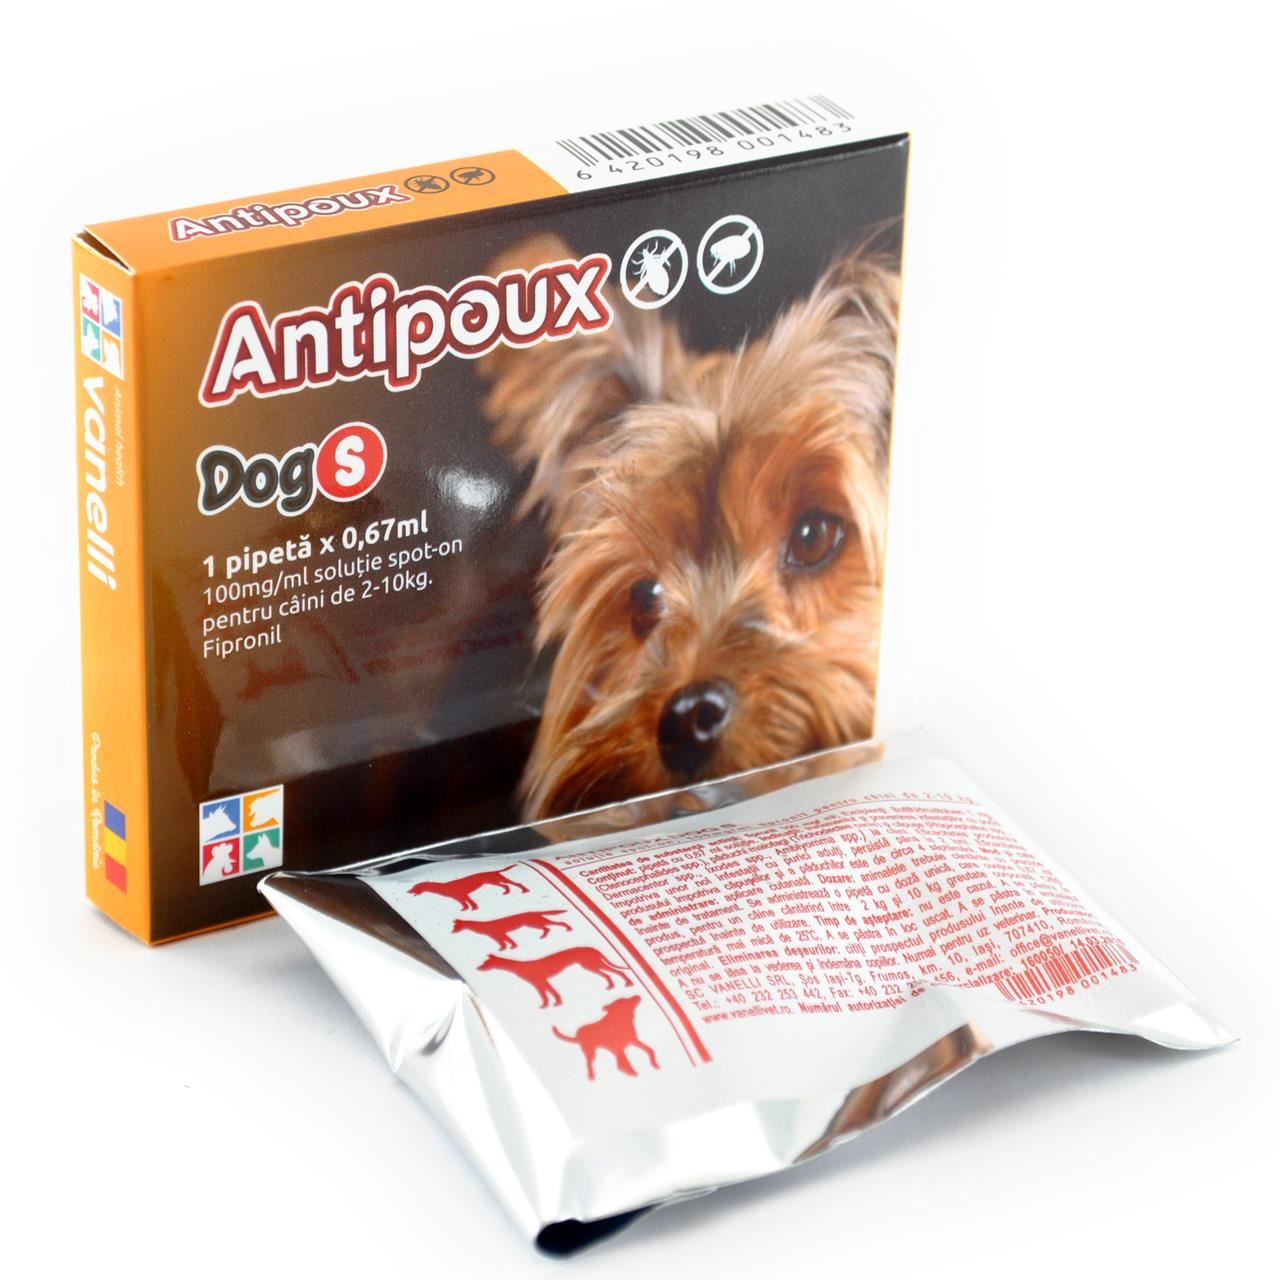 Antipoux dog s * 1 pip